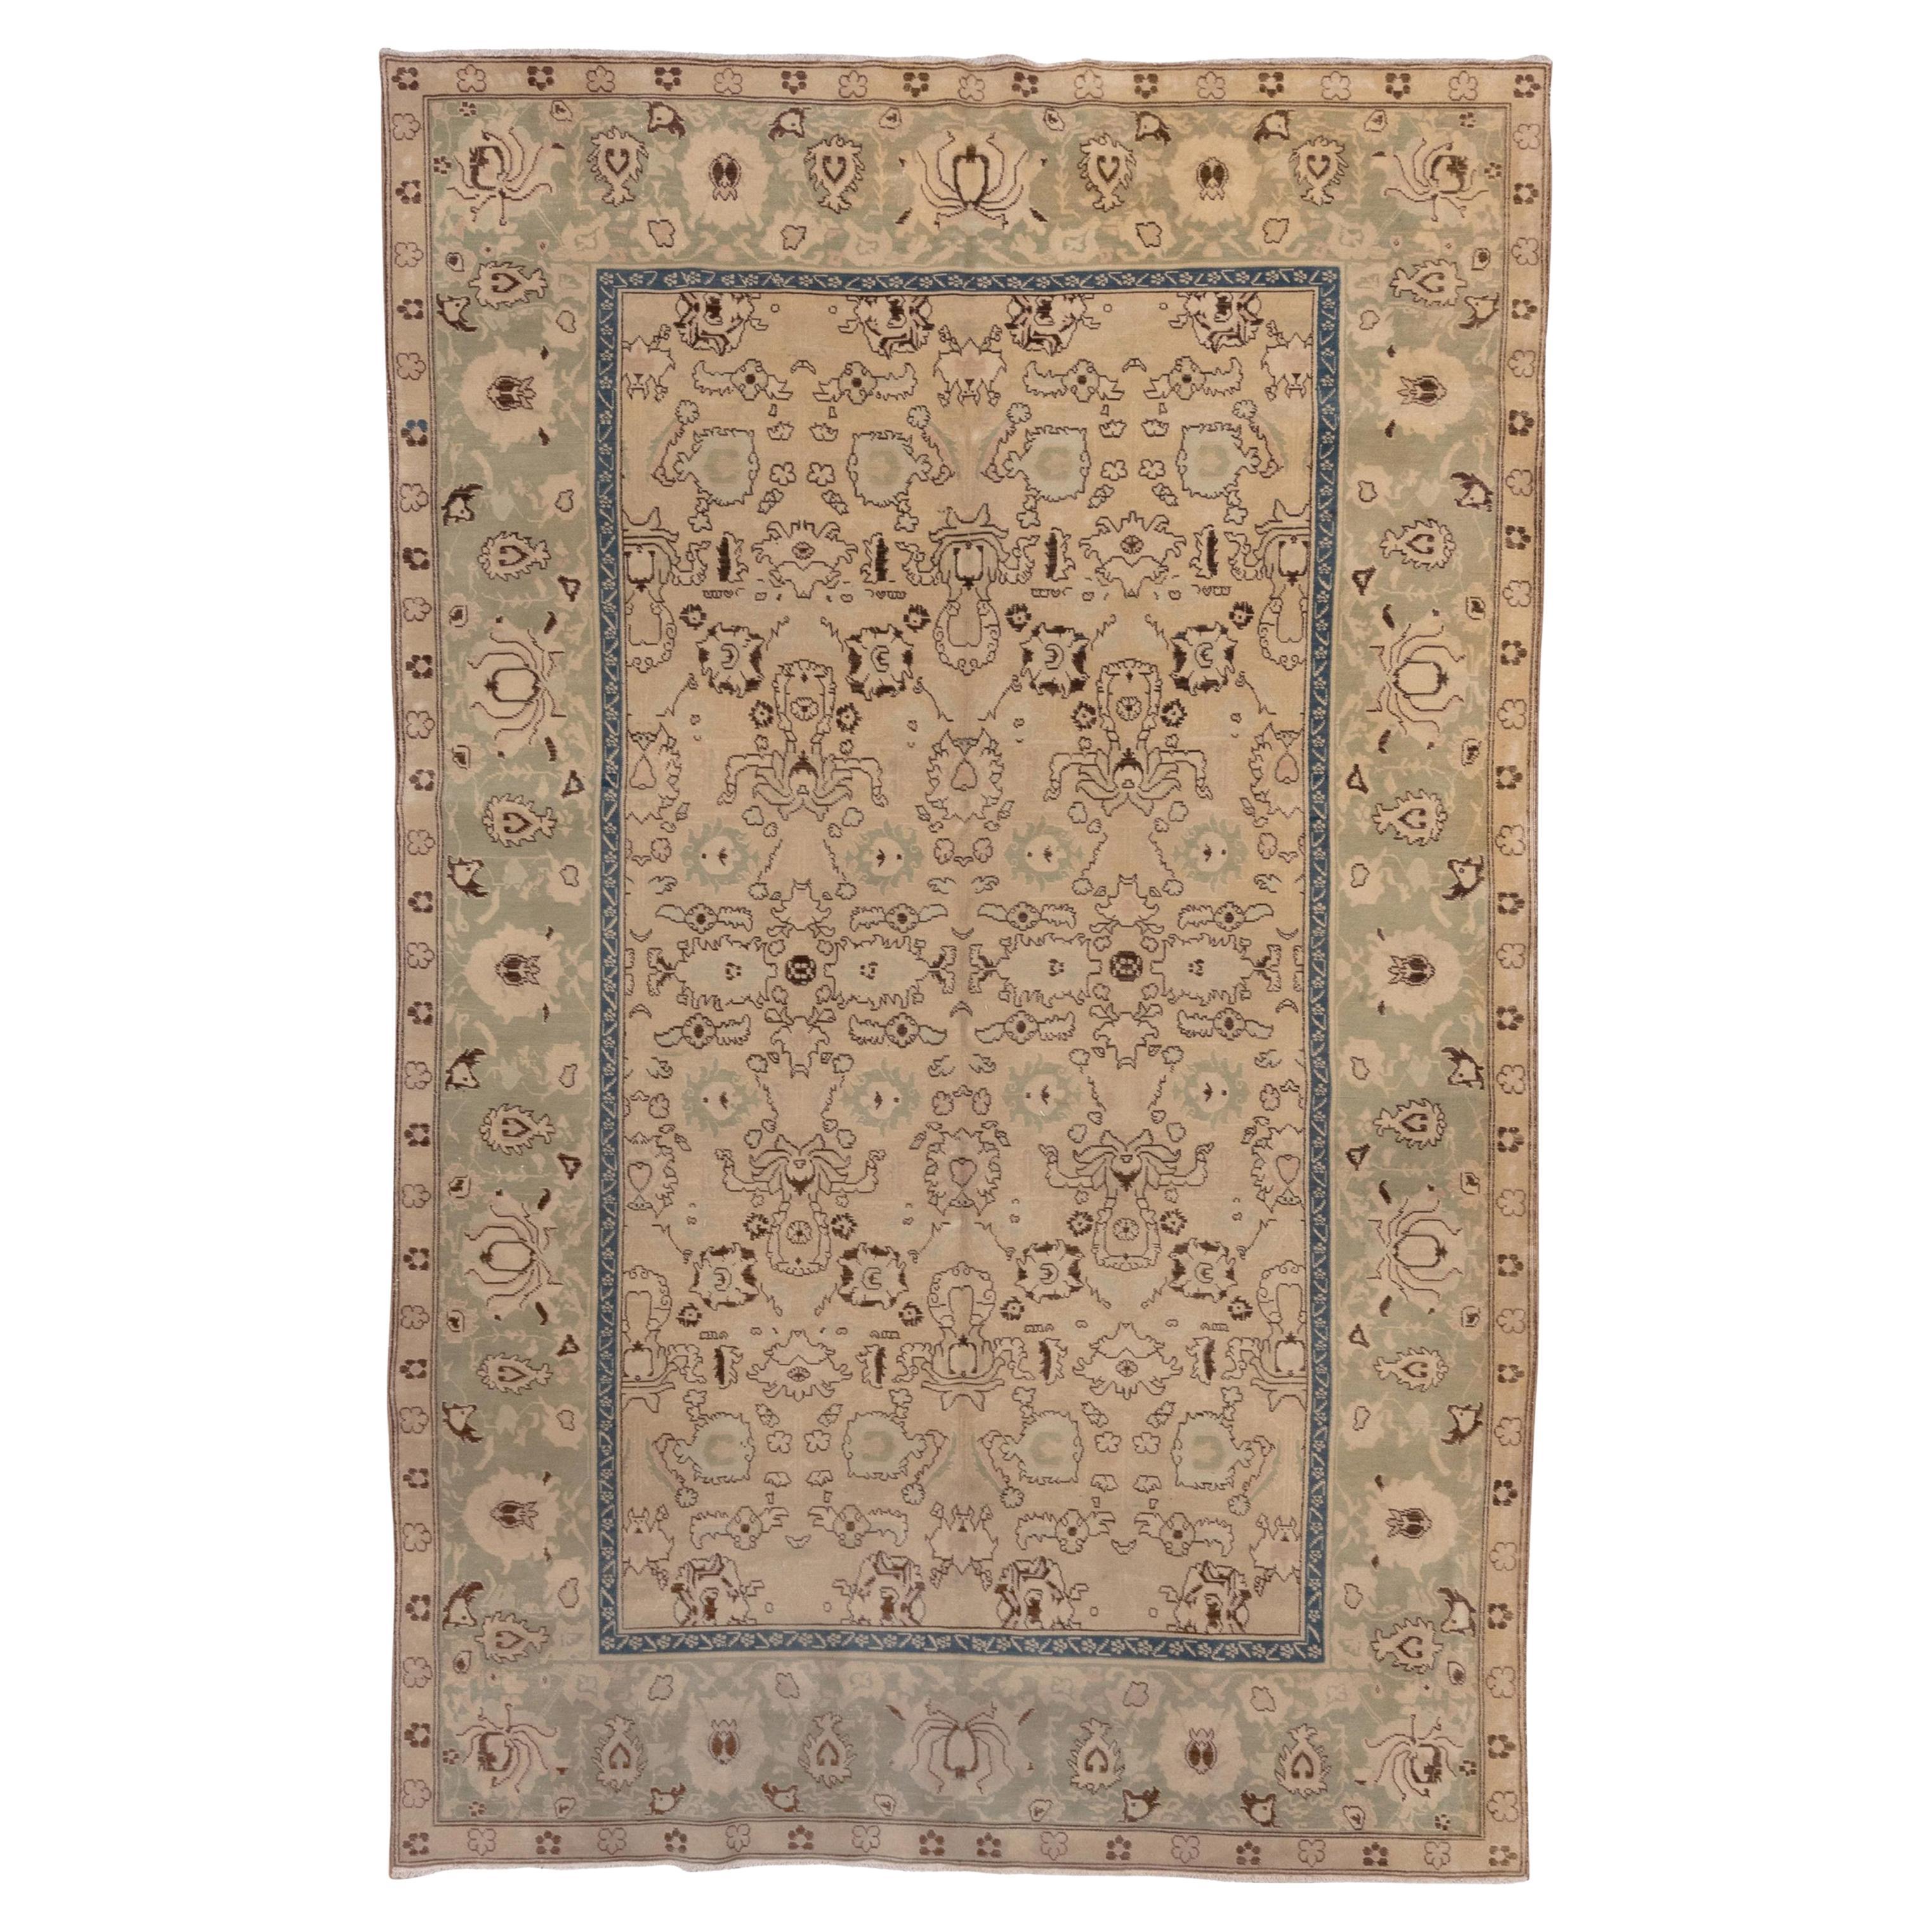 Small Antique Indian Agra Carpet, circa 1920s, Soft Palette